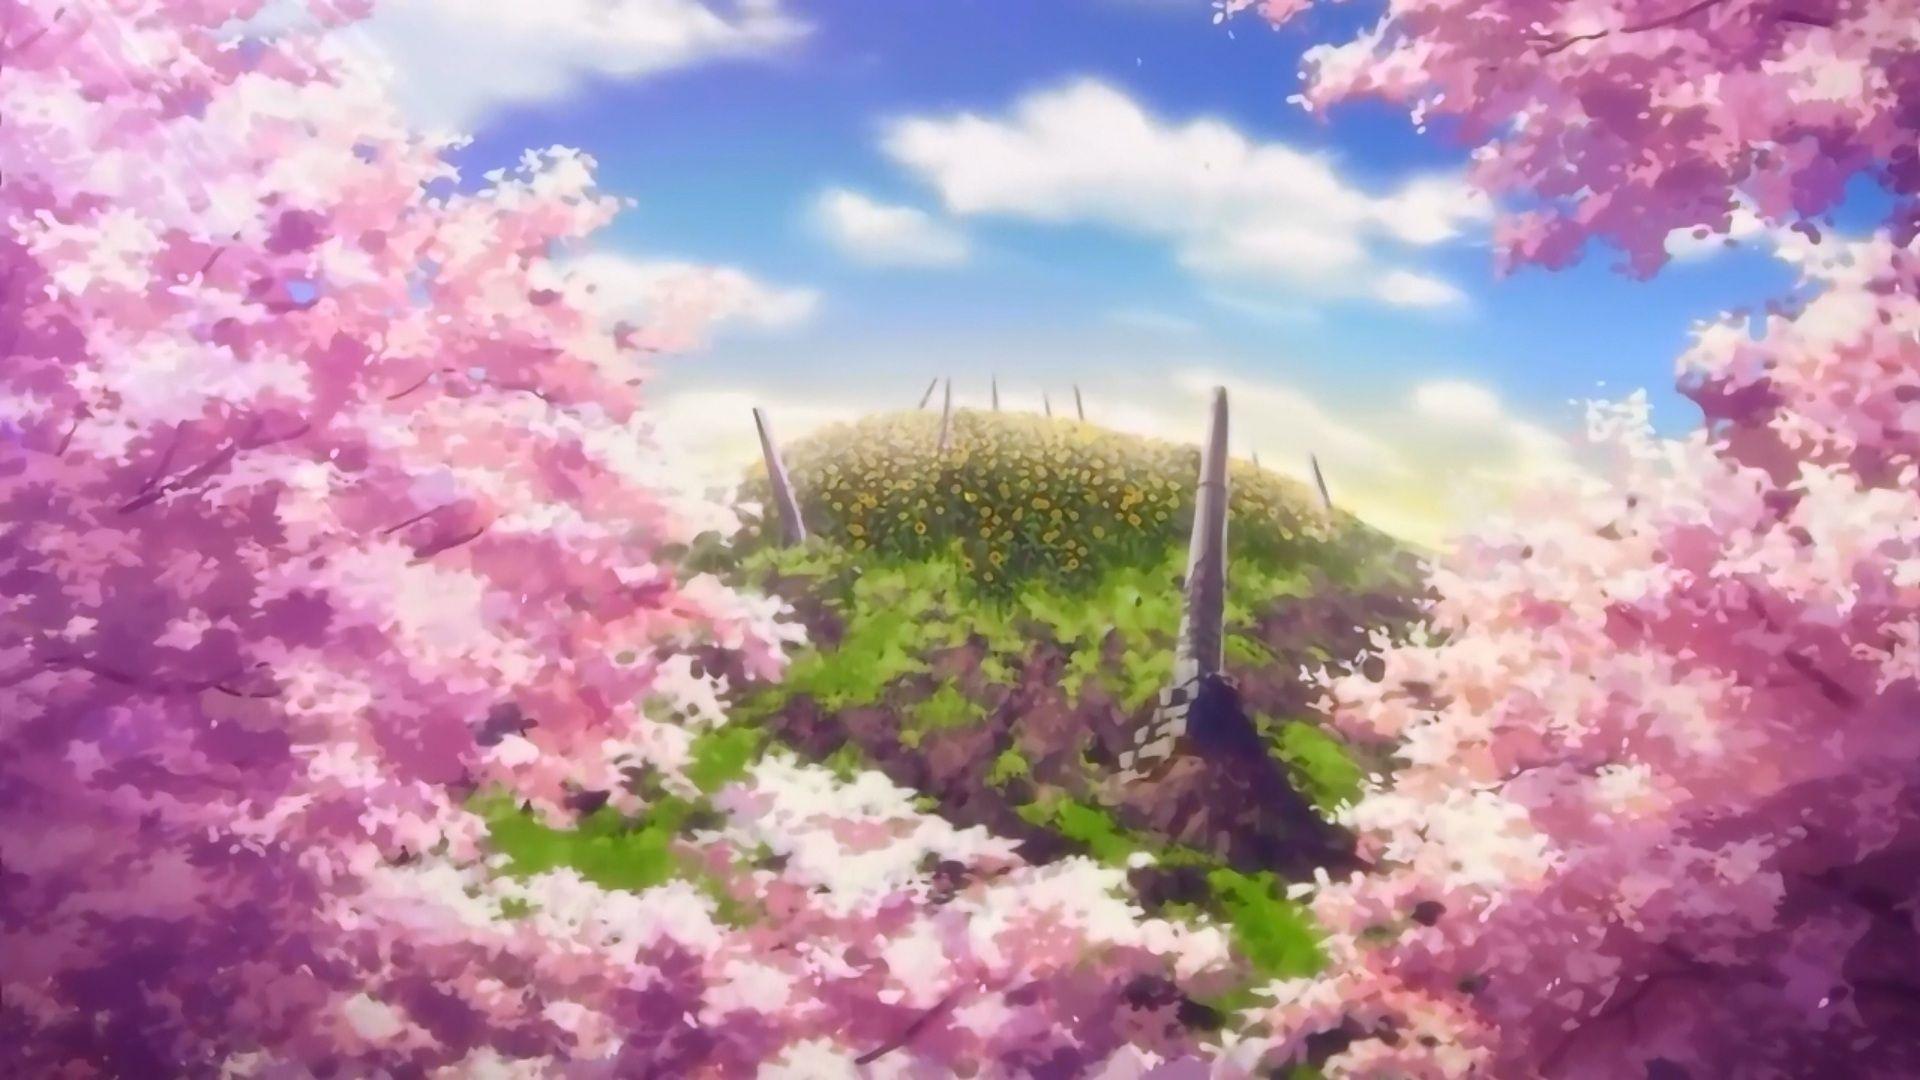 Anime Scenery wallpaper. Anime scenery, Anime cherry